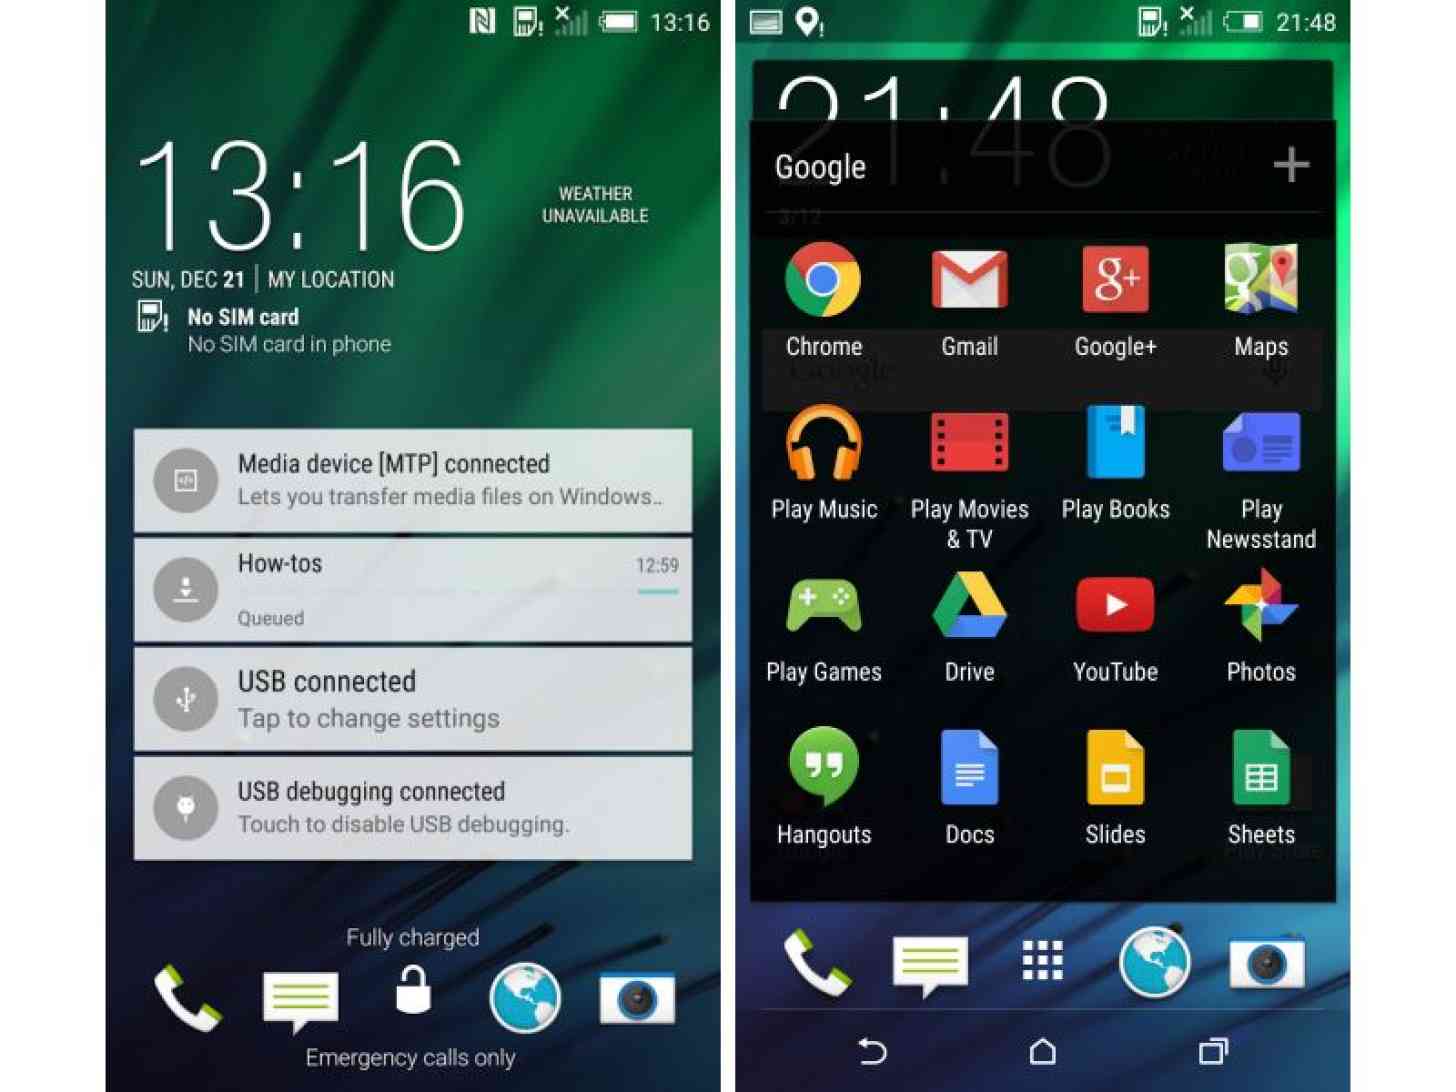 HTC One (M8) Android 5.0 Lollipop Sense 6 screenshot leak lock screen